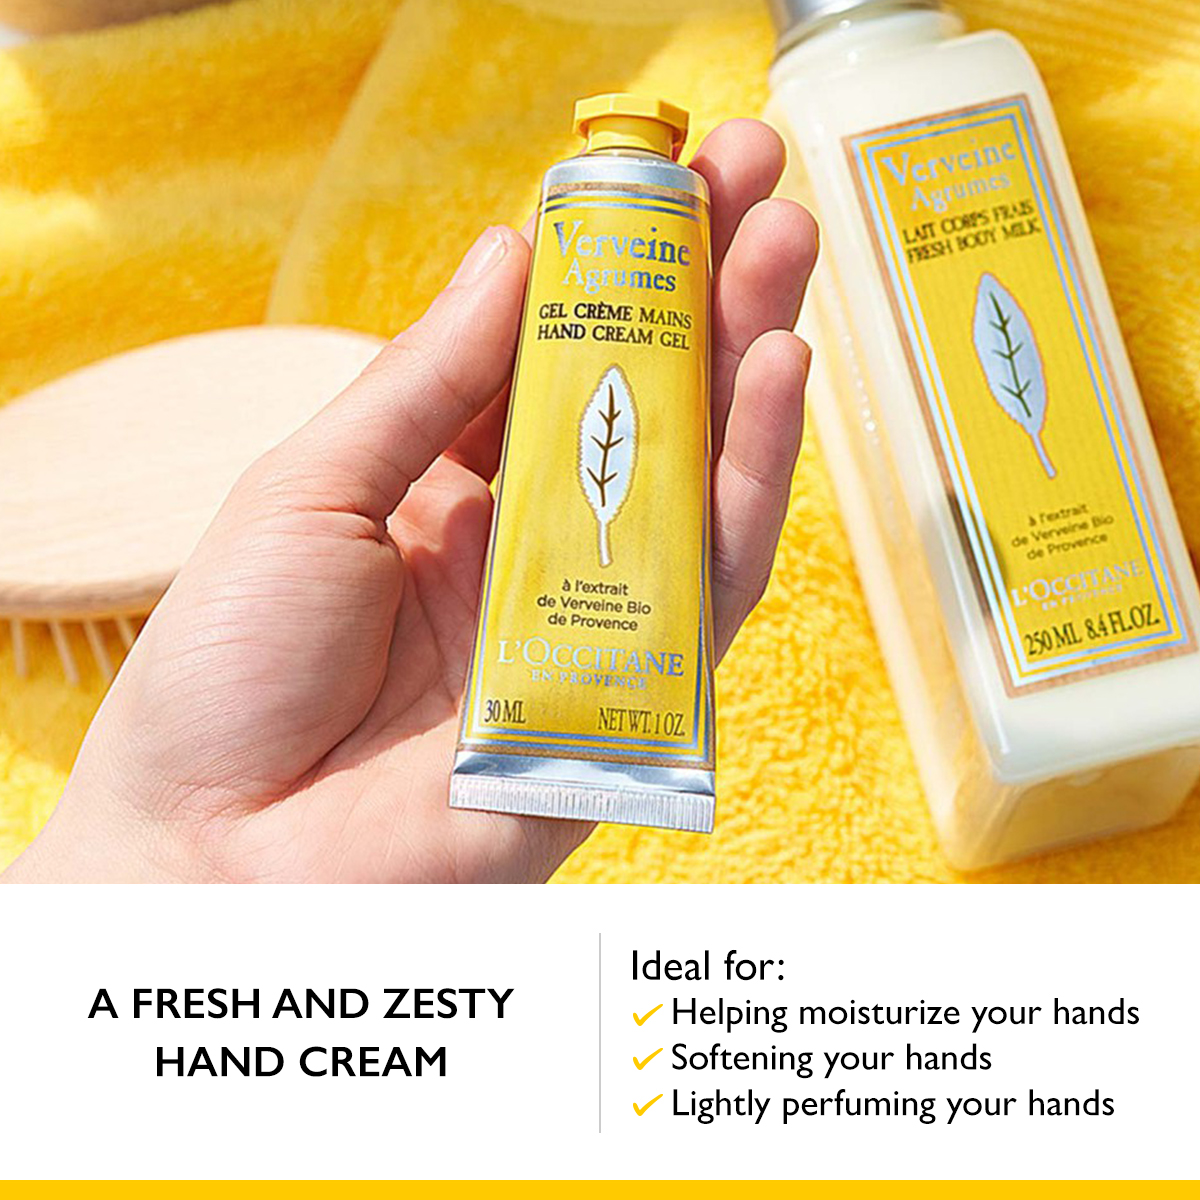 L'Occitane Citrus Verbena Hand Cream Gel 30ml Travel Size [Hydrating] |  Lazada PH